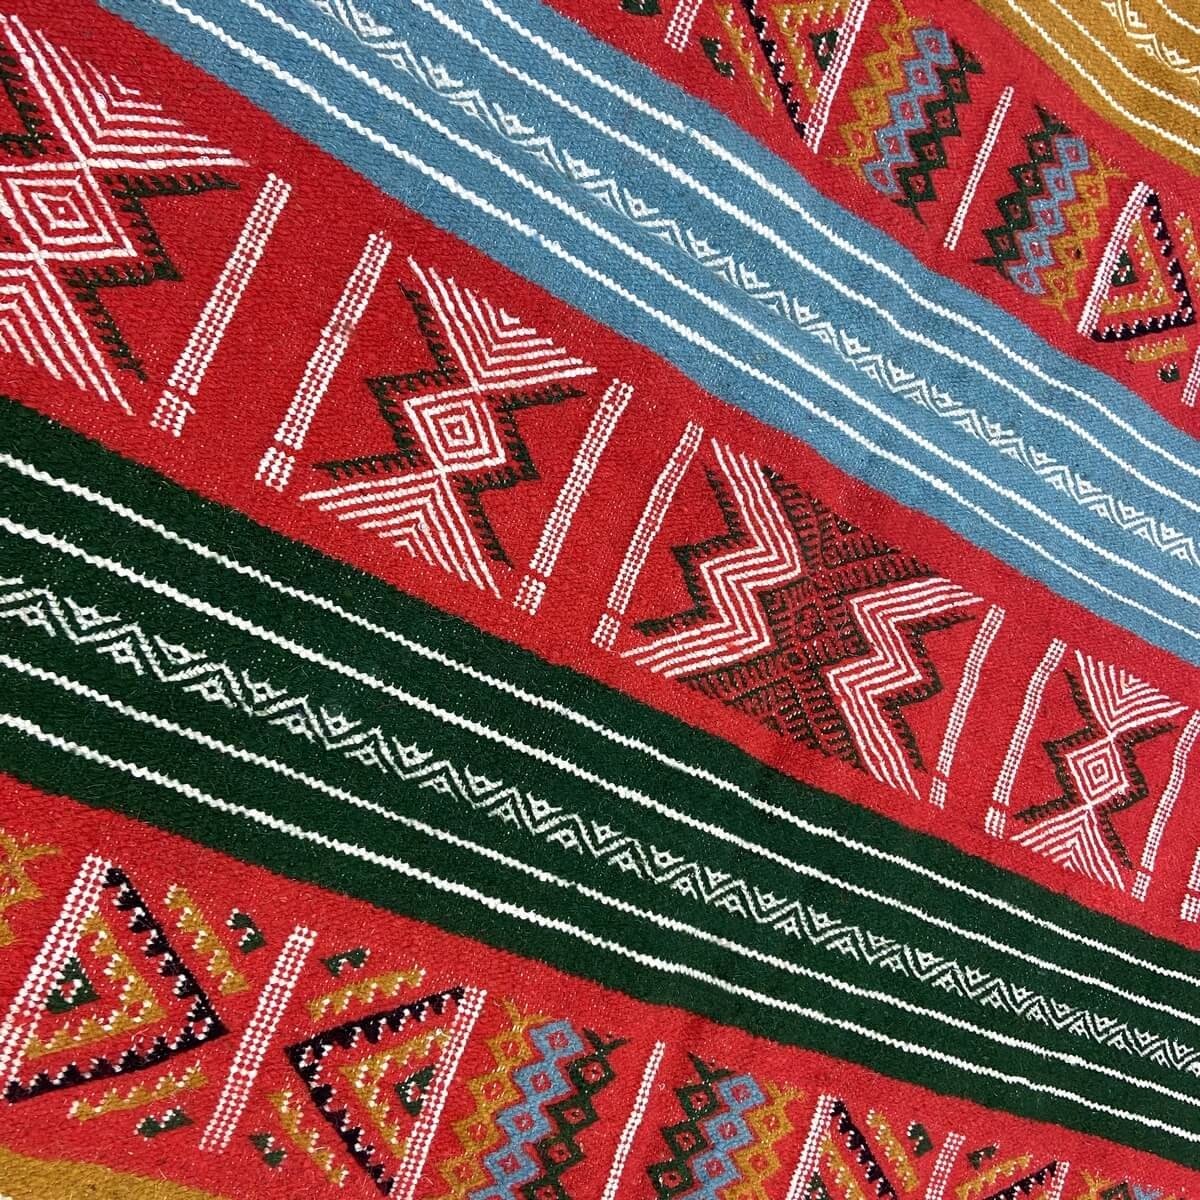 Berber tapijt Tapijt Kilim Dalina 100x150 Veelkleurig (Handgeweven, Wol, Tunesië) Tunesisch kilimdeken, Marokkaanse stijl. Recht